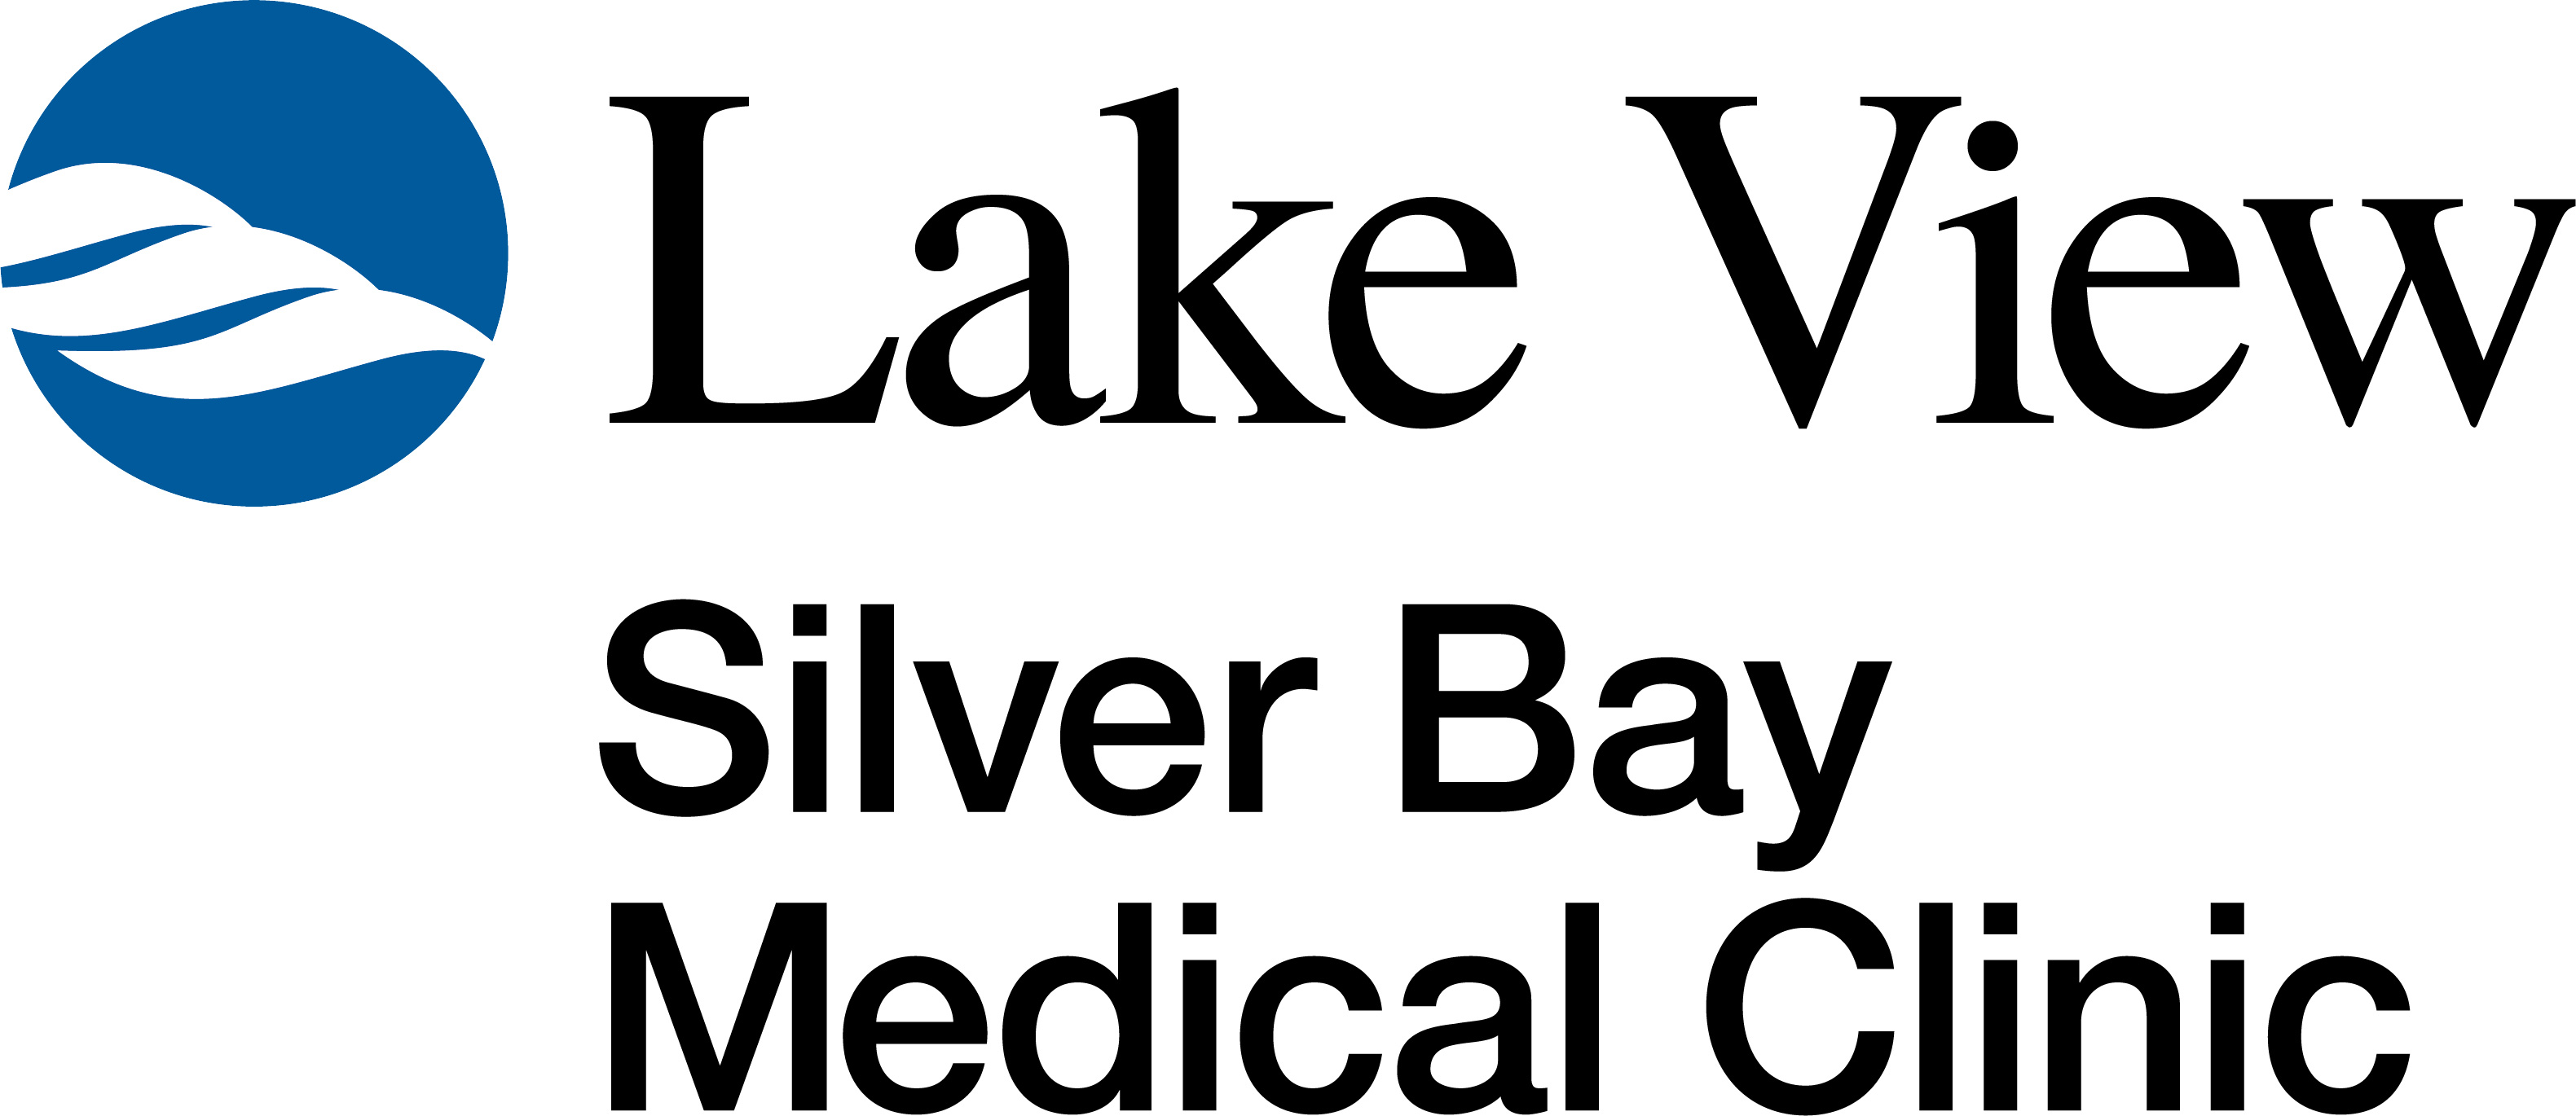 Lake View Silver Bay Medical Clinic Logo